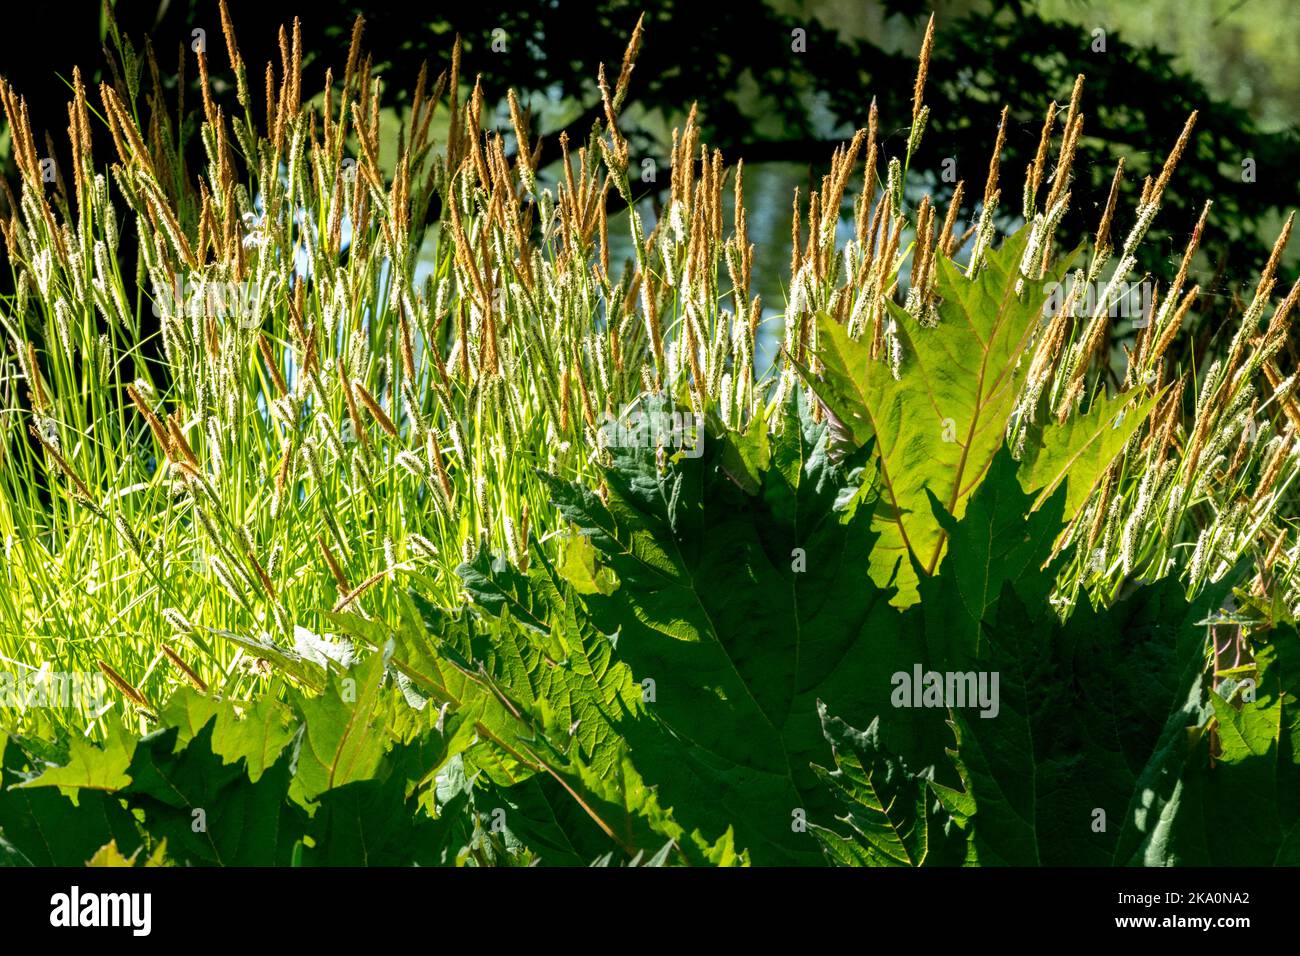 Tufted sedge, Carex elata, Sedge, Carex, Clumps of, Blooming, Grass, Flowering, Sunlit, Garden Stock Photo